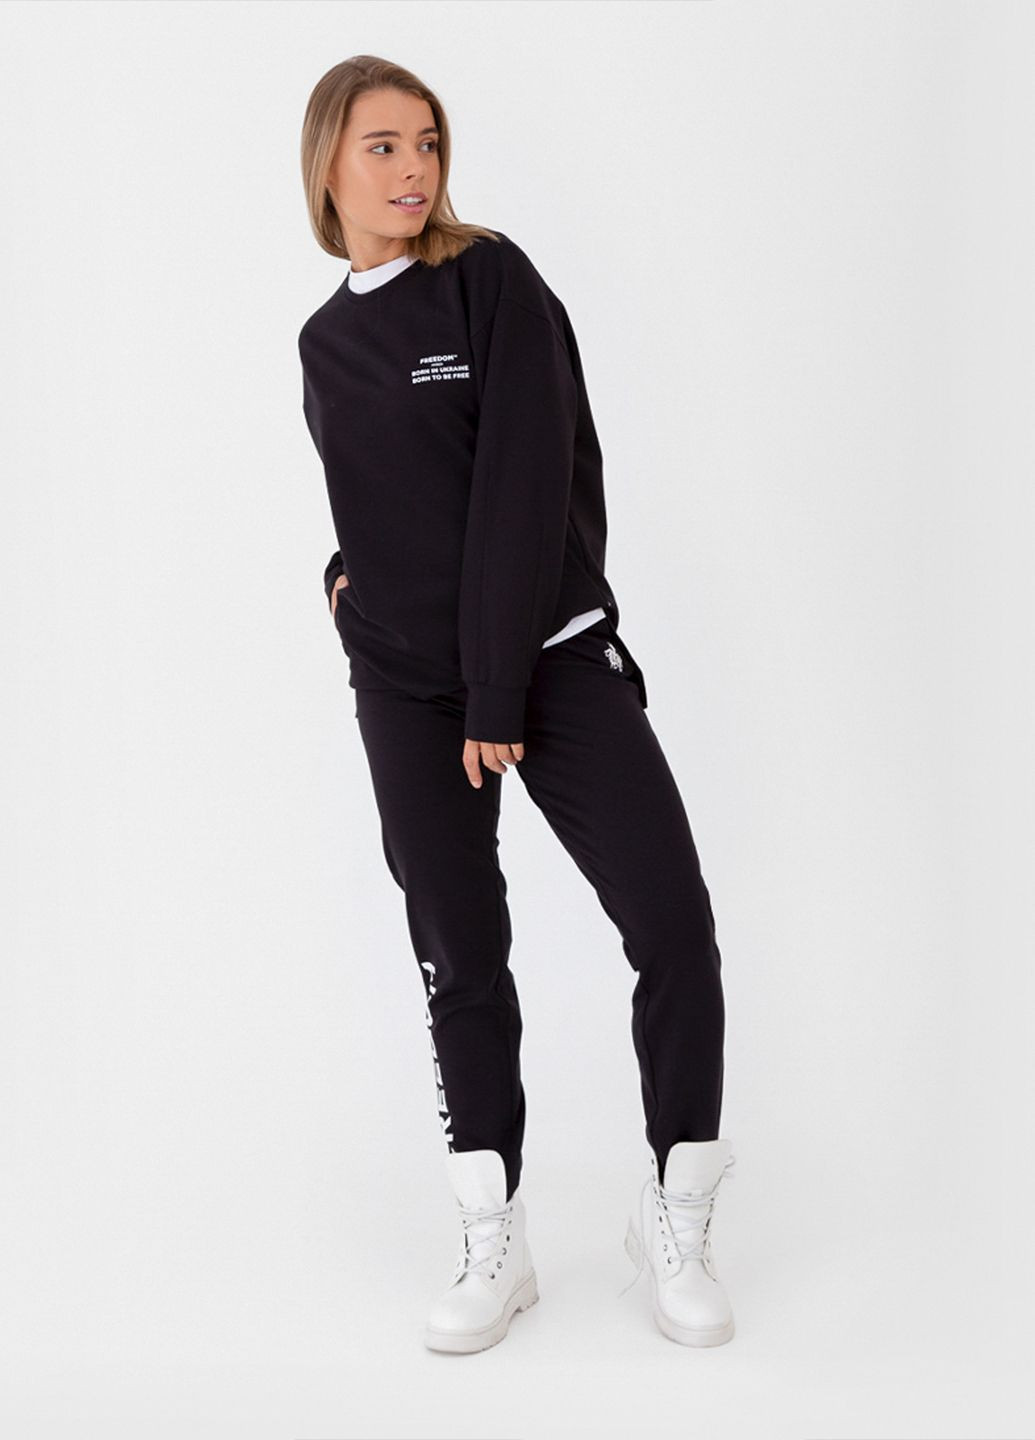 Спортивные штаны женские by Arber черные Freedom jogger losse w (285791832)